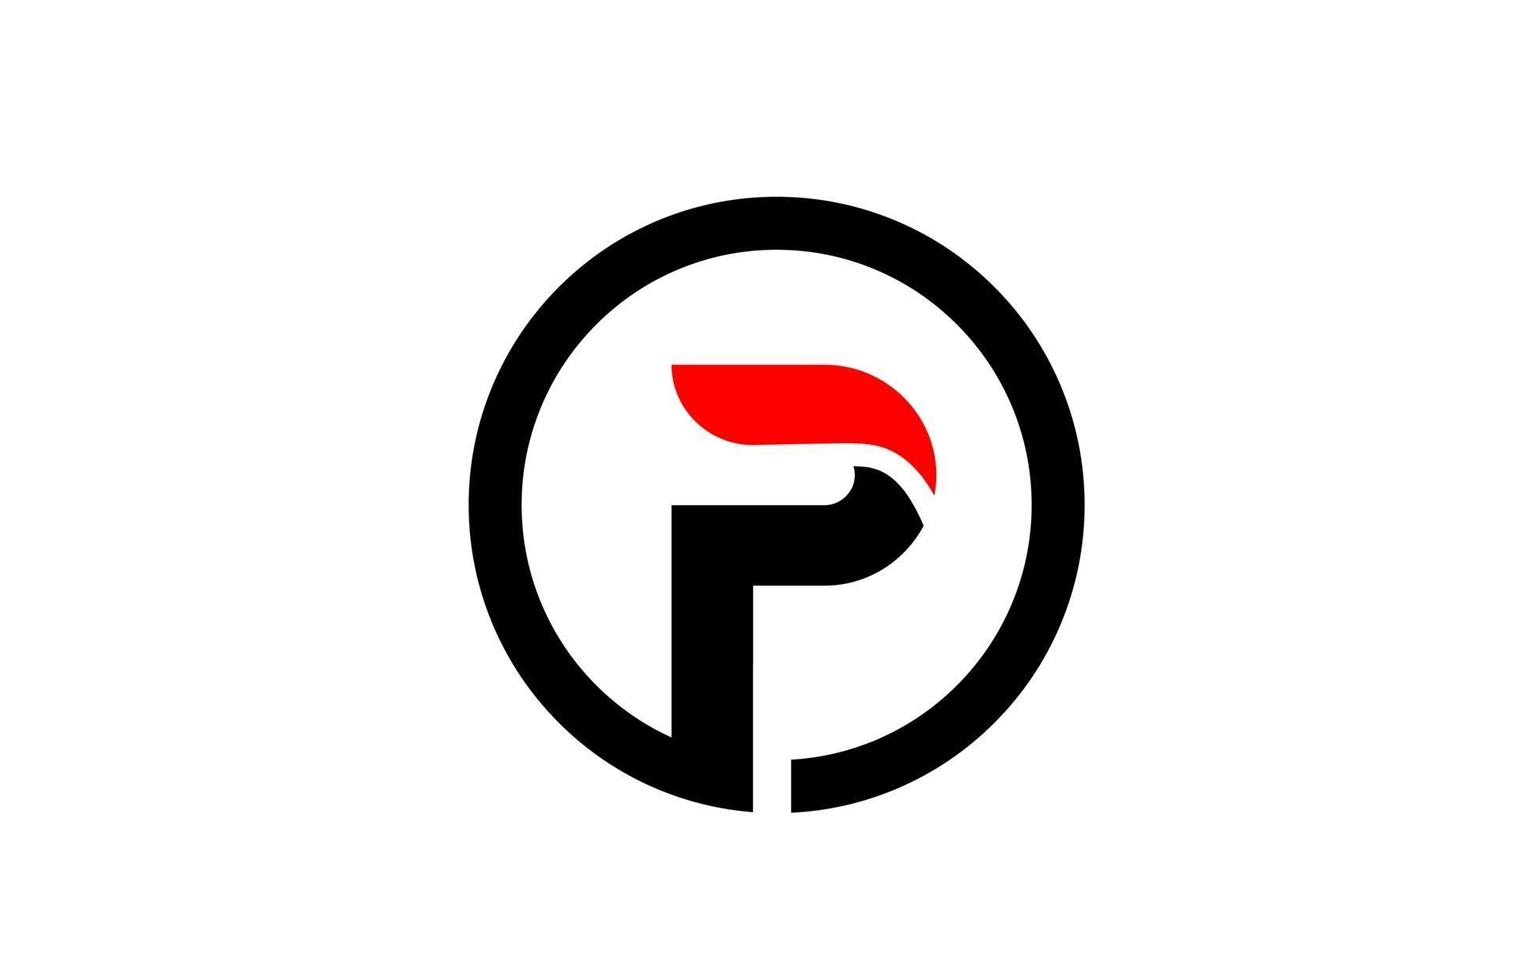 Design of circle alphabet letter P for company logo icon vector